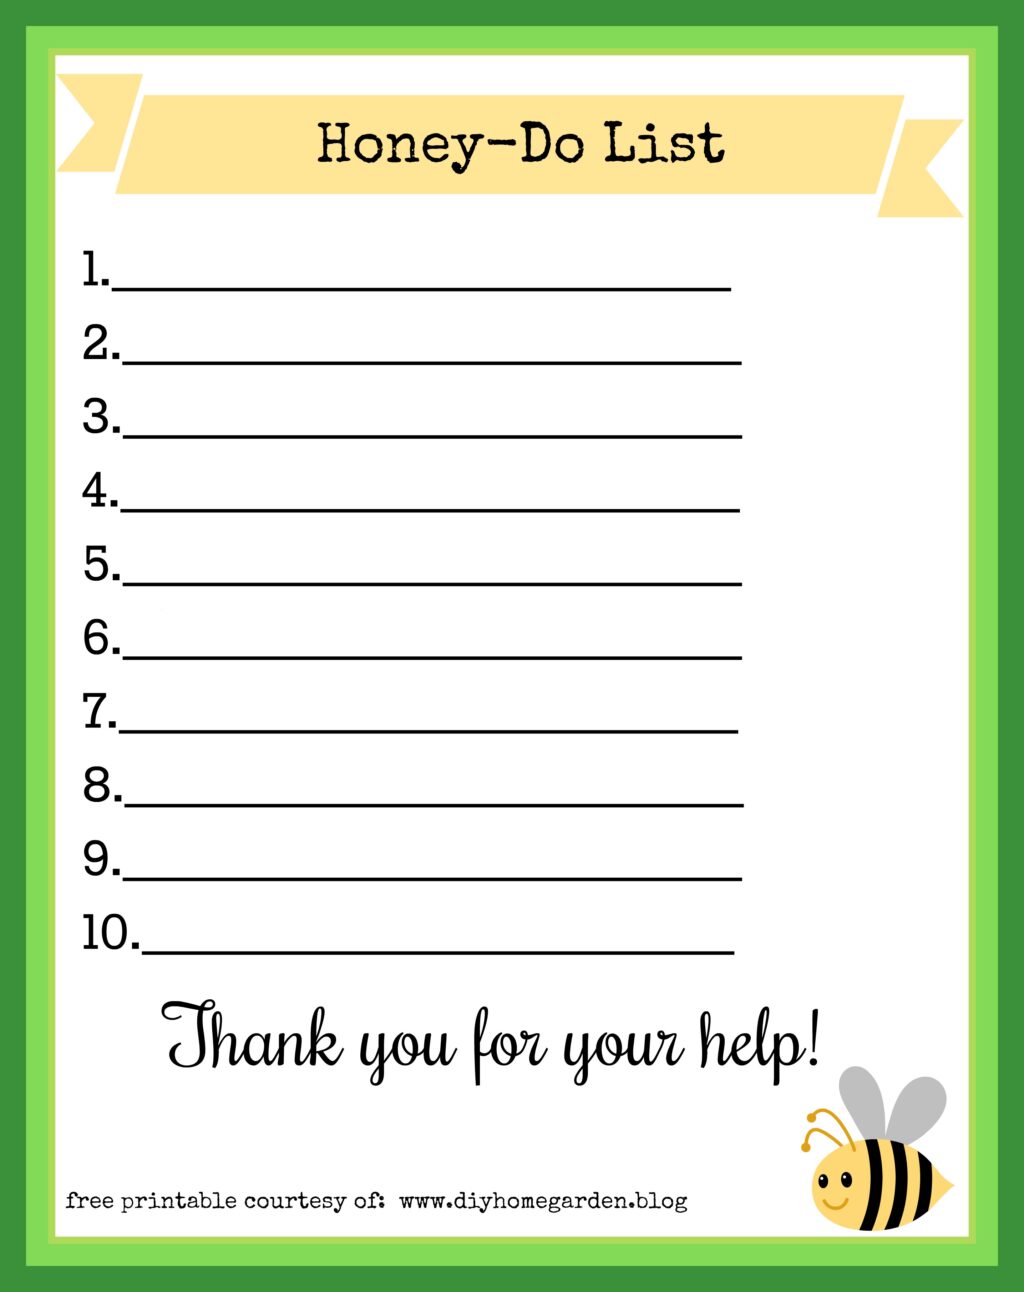 free printable honey-do list